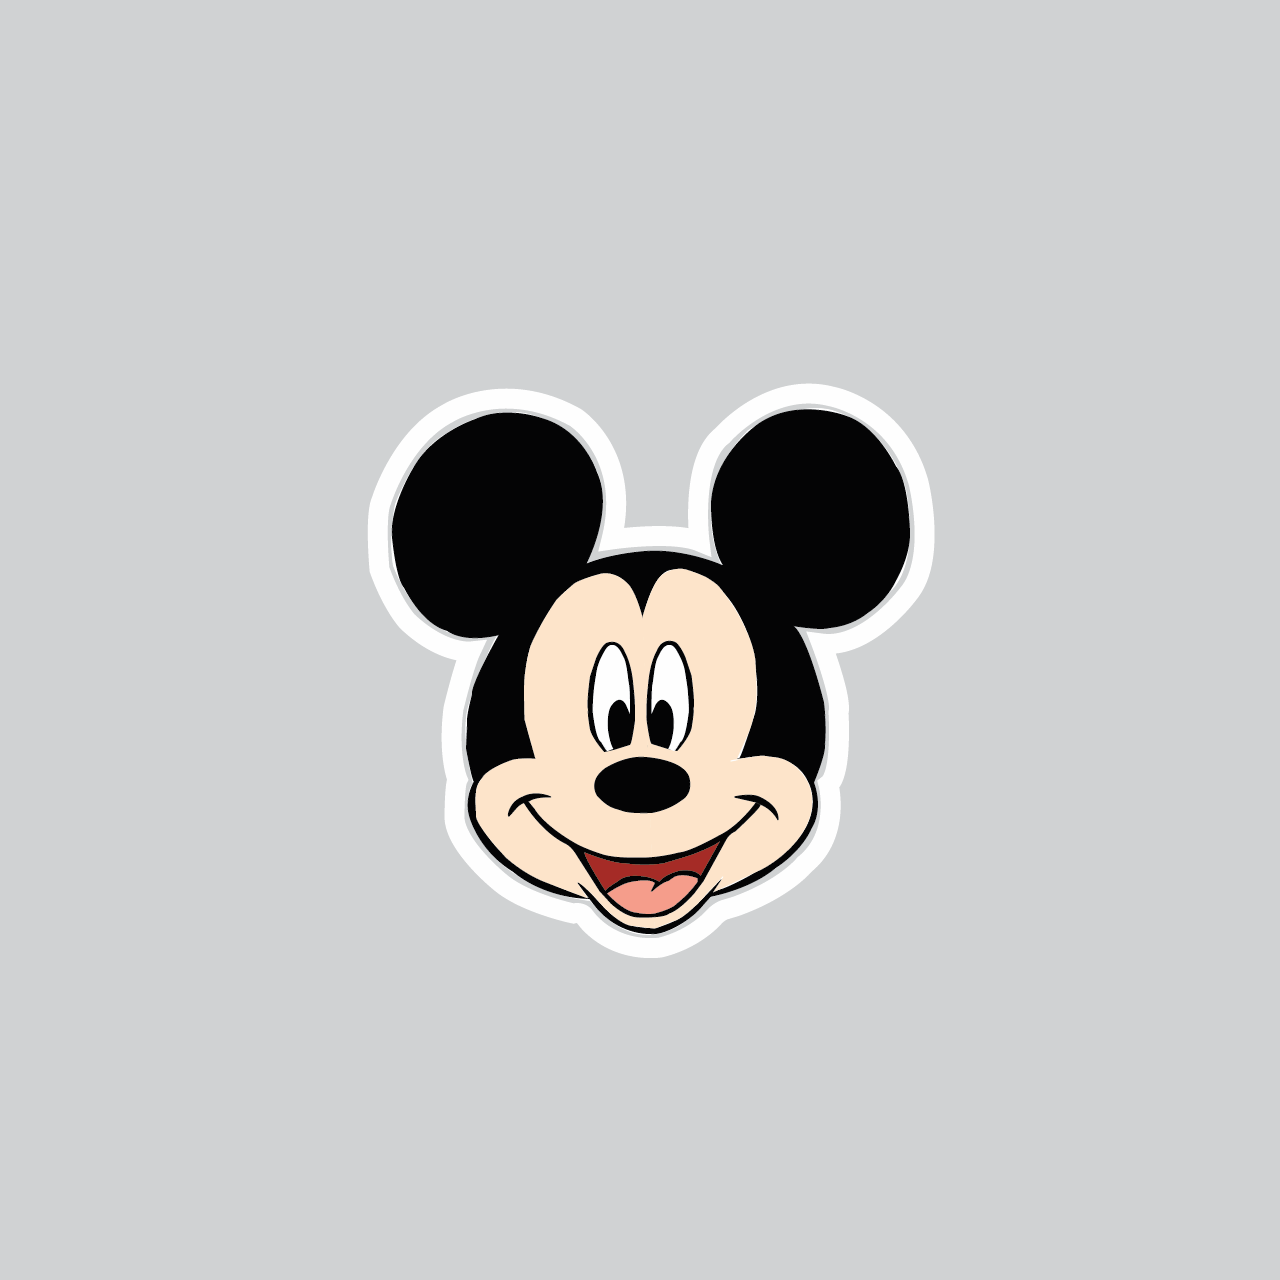 Mickey mouse face vector